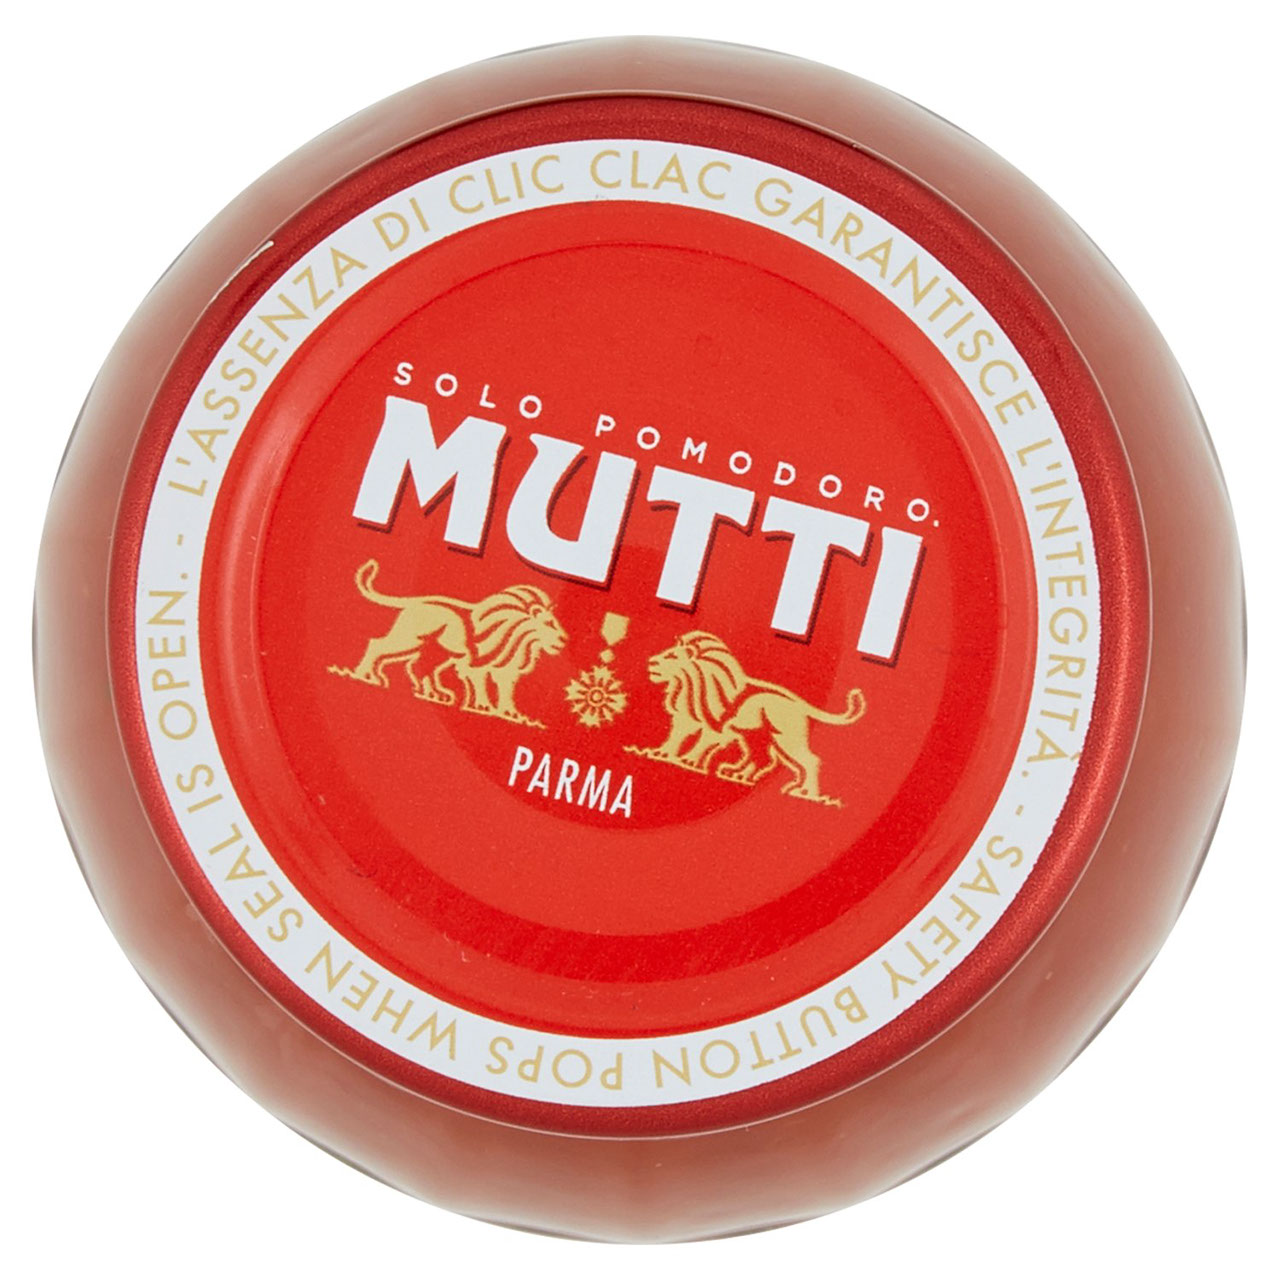 Mutti Salsa Pronta Datterini in vendita online